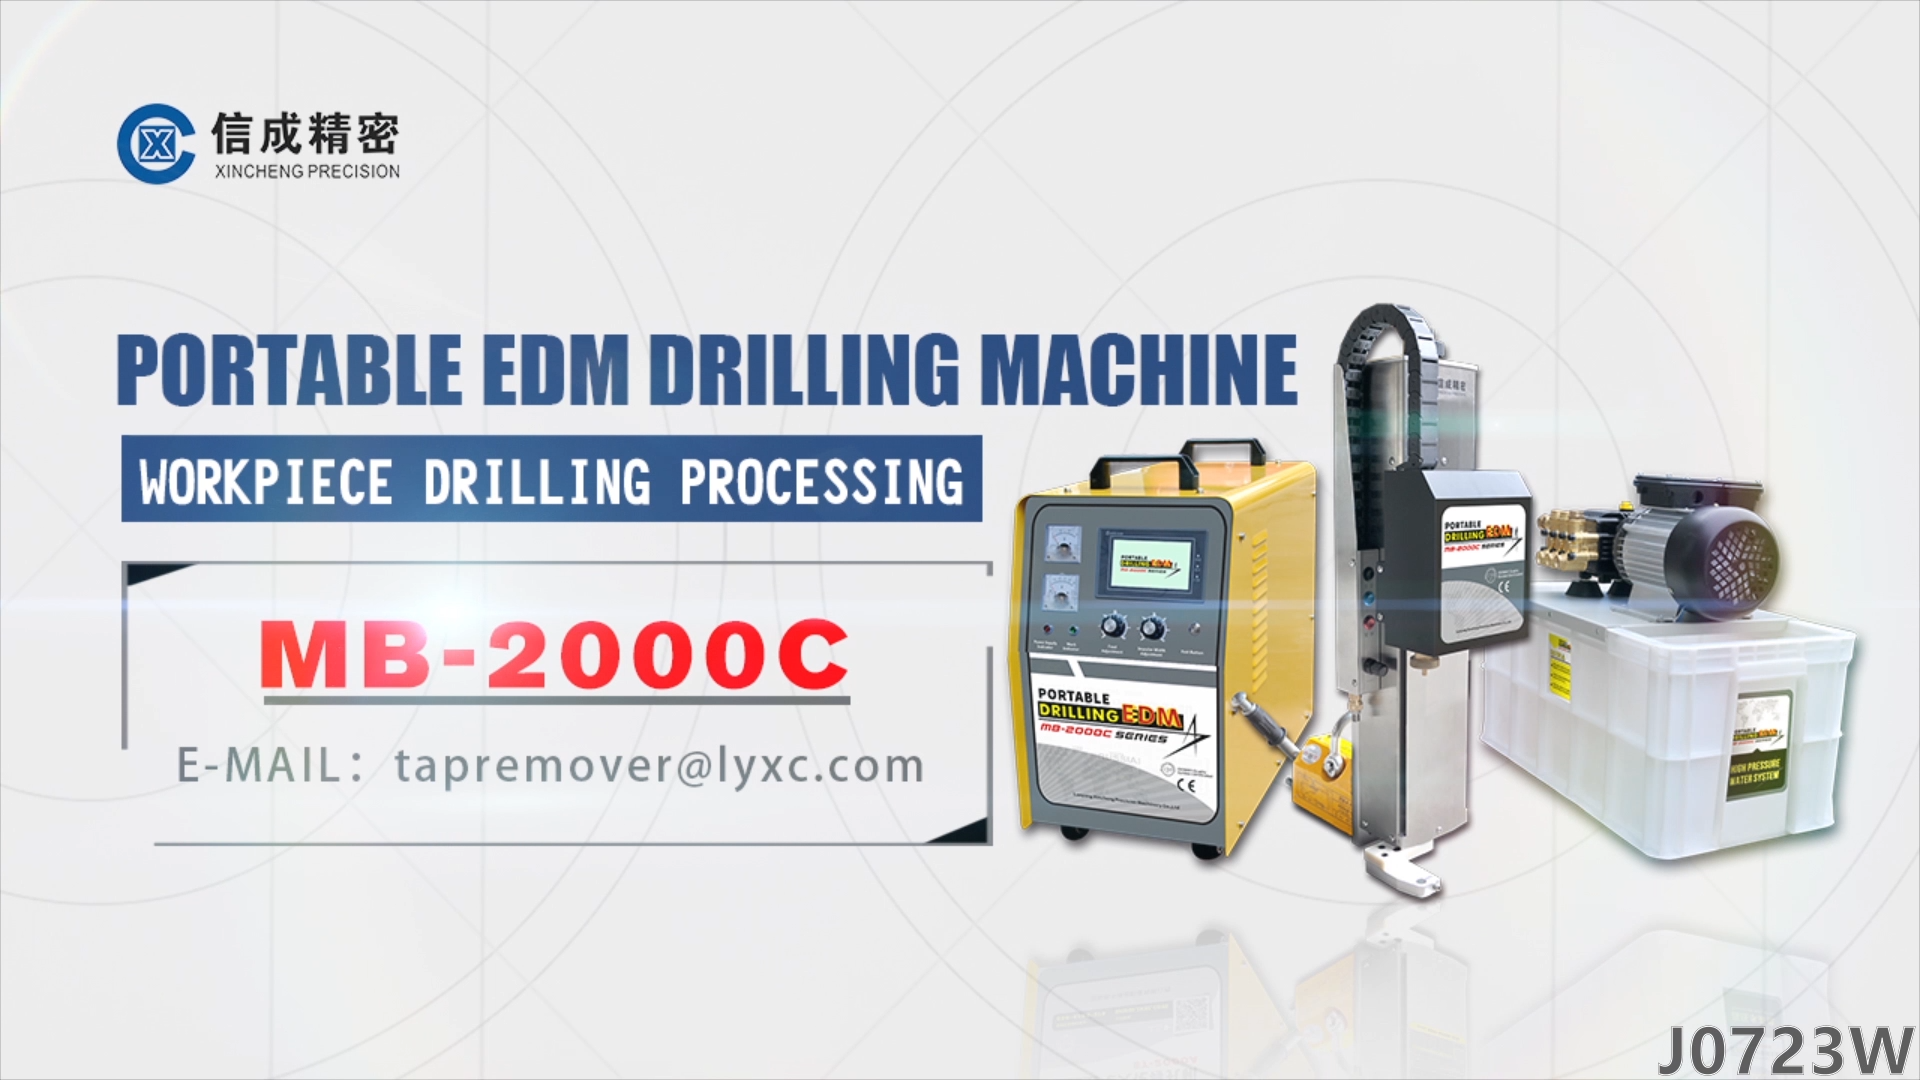 MB-2000C Portable EDM Drilling Machine 0.5-3mm Demo Video